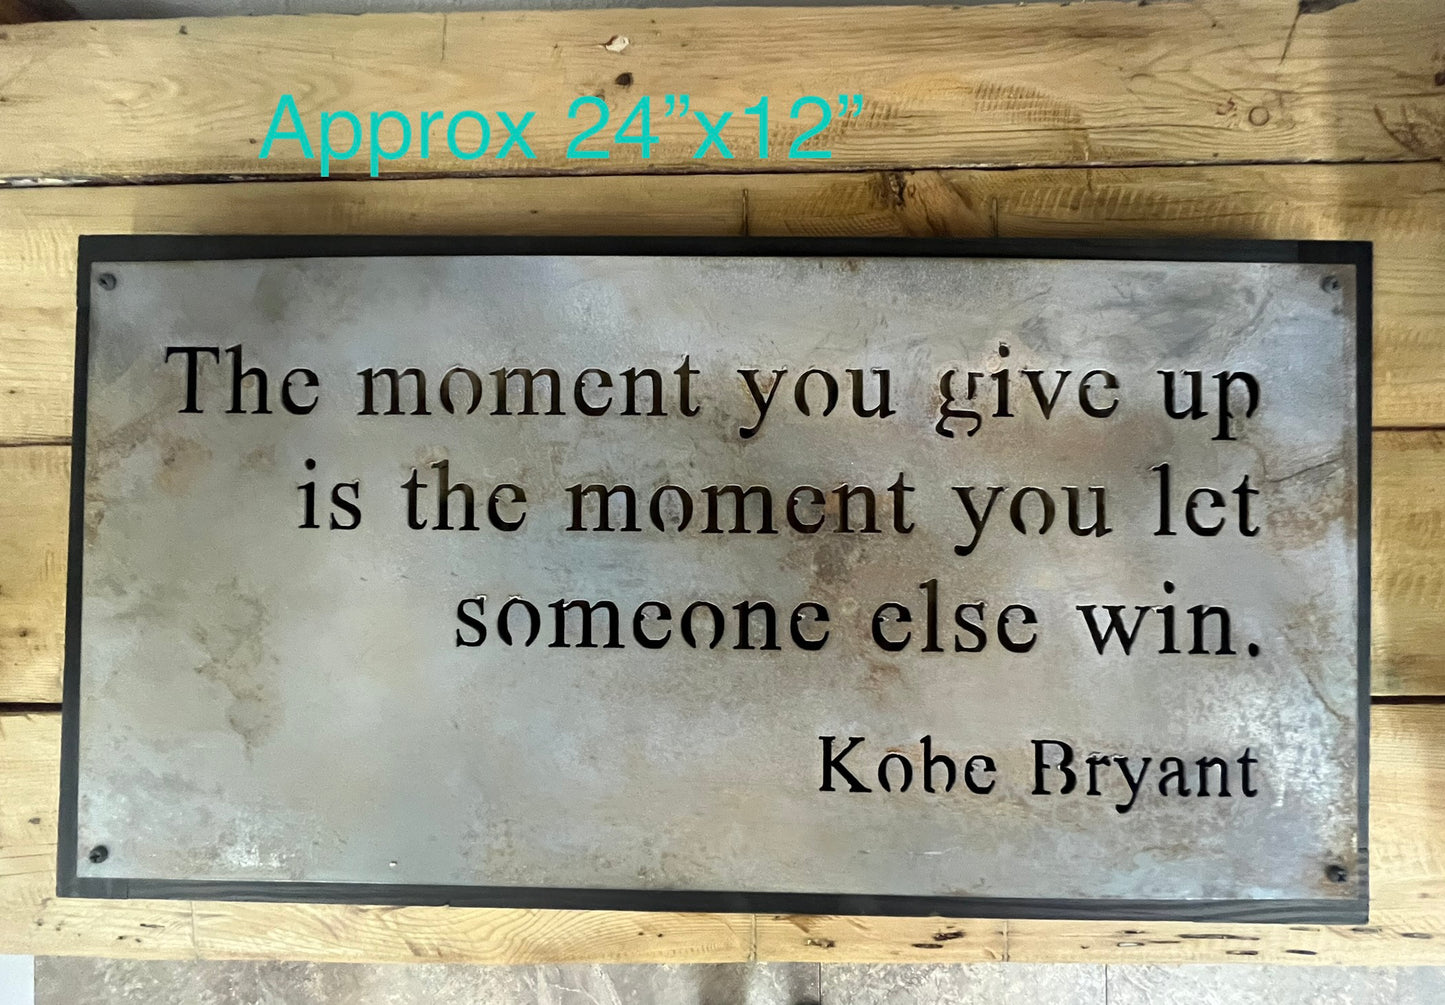 sign - Kobe Bryant  -The moment